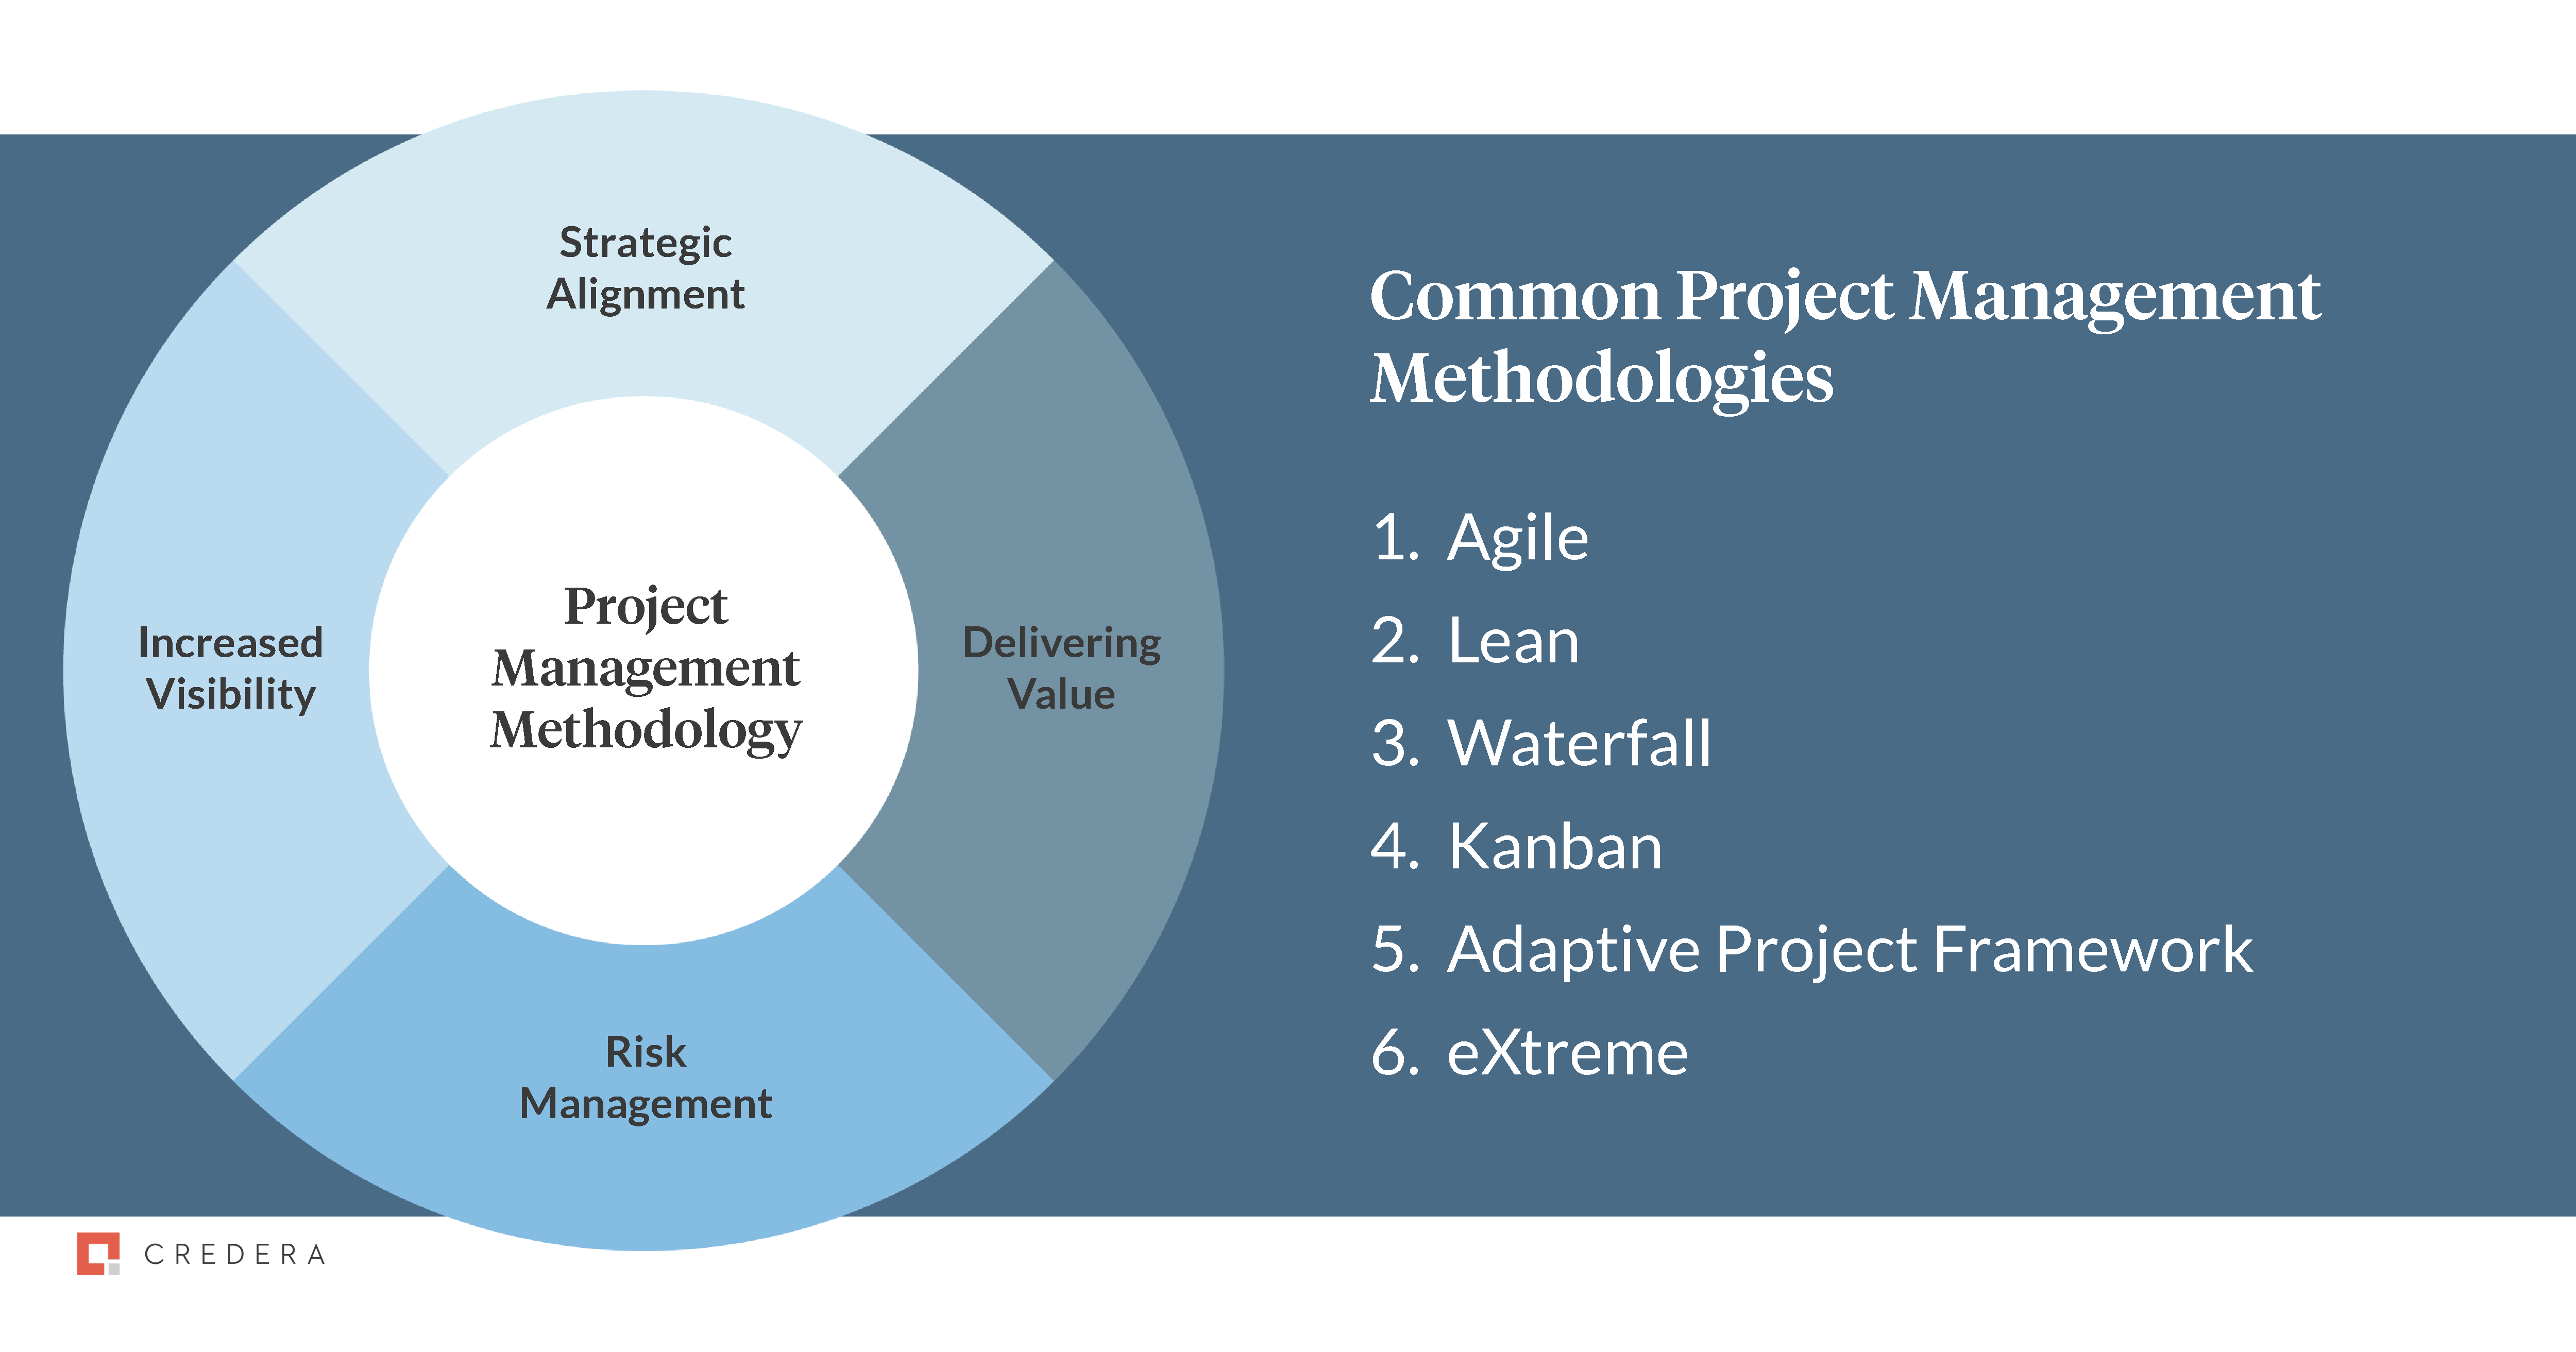 Common Project Management Methodologies